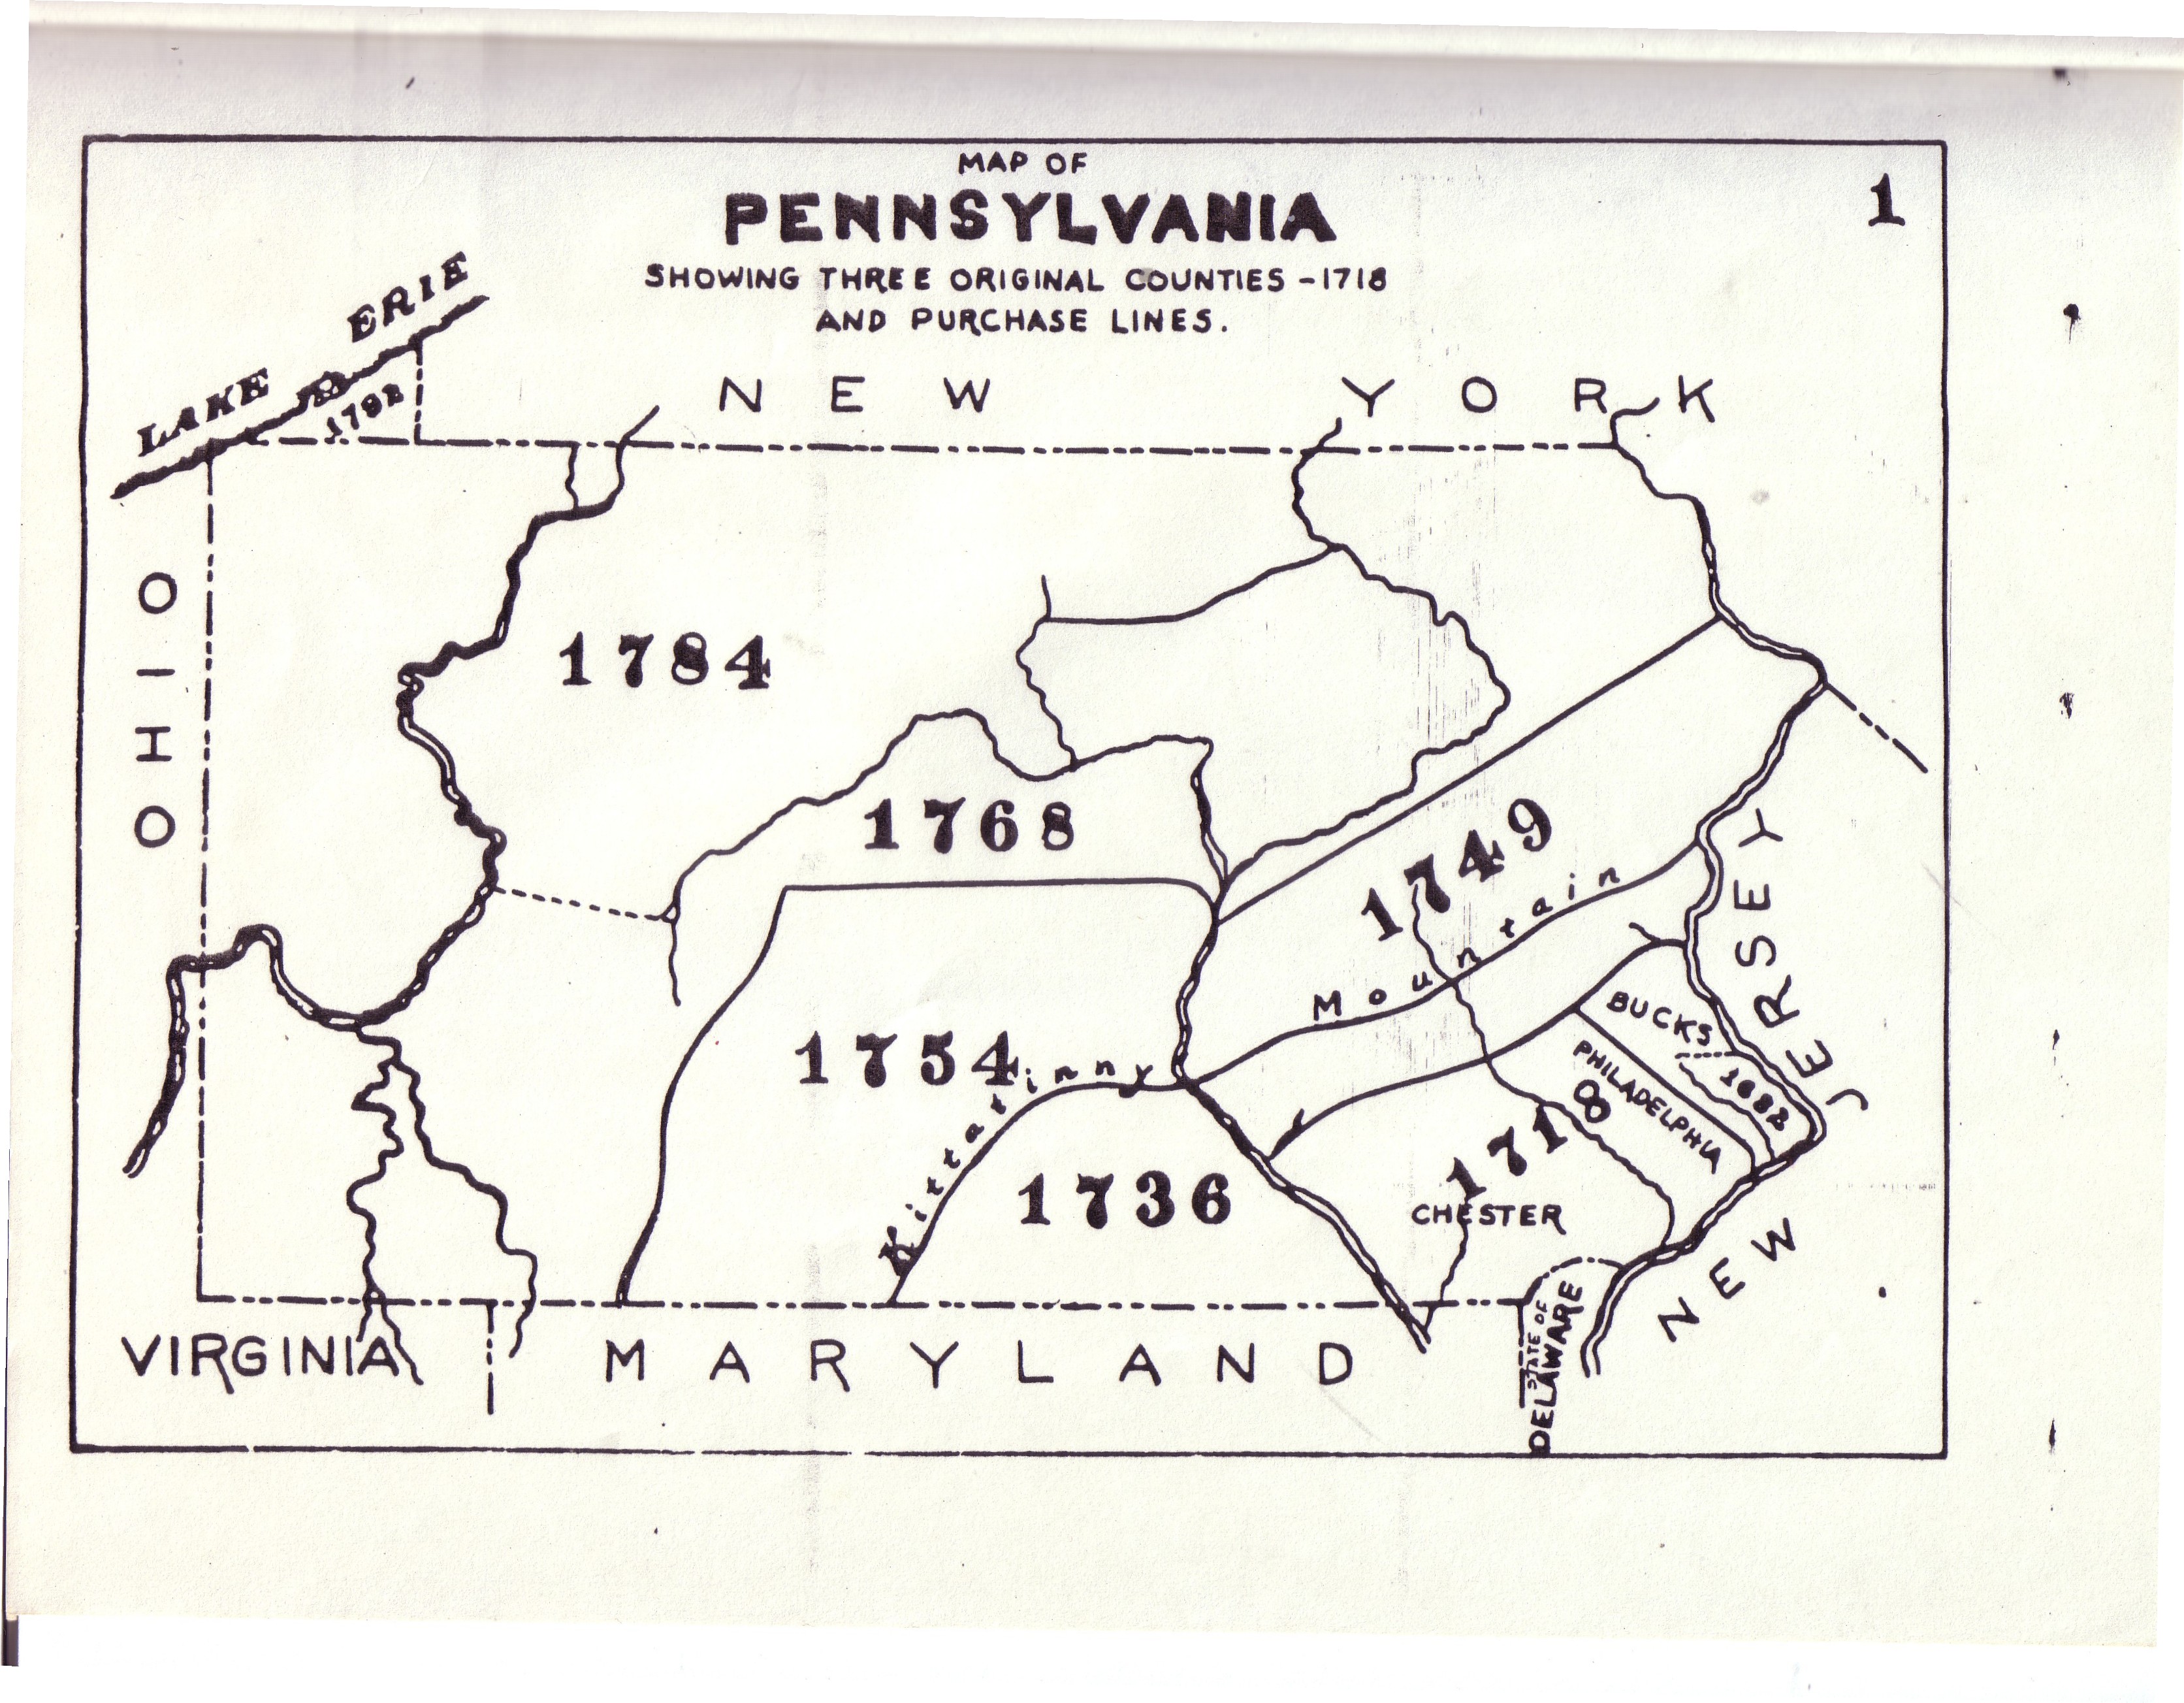 Pennsylvania Counties Historical Maps